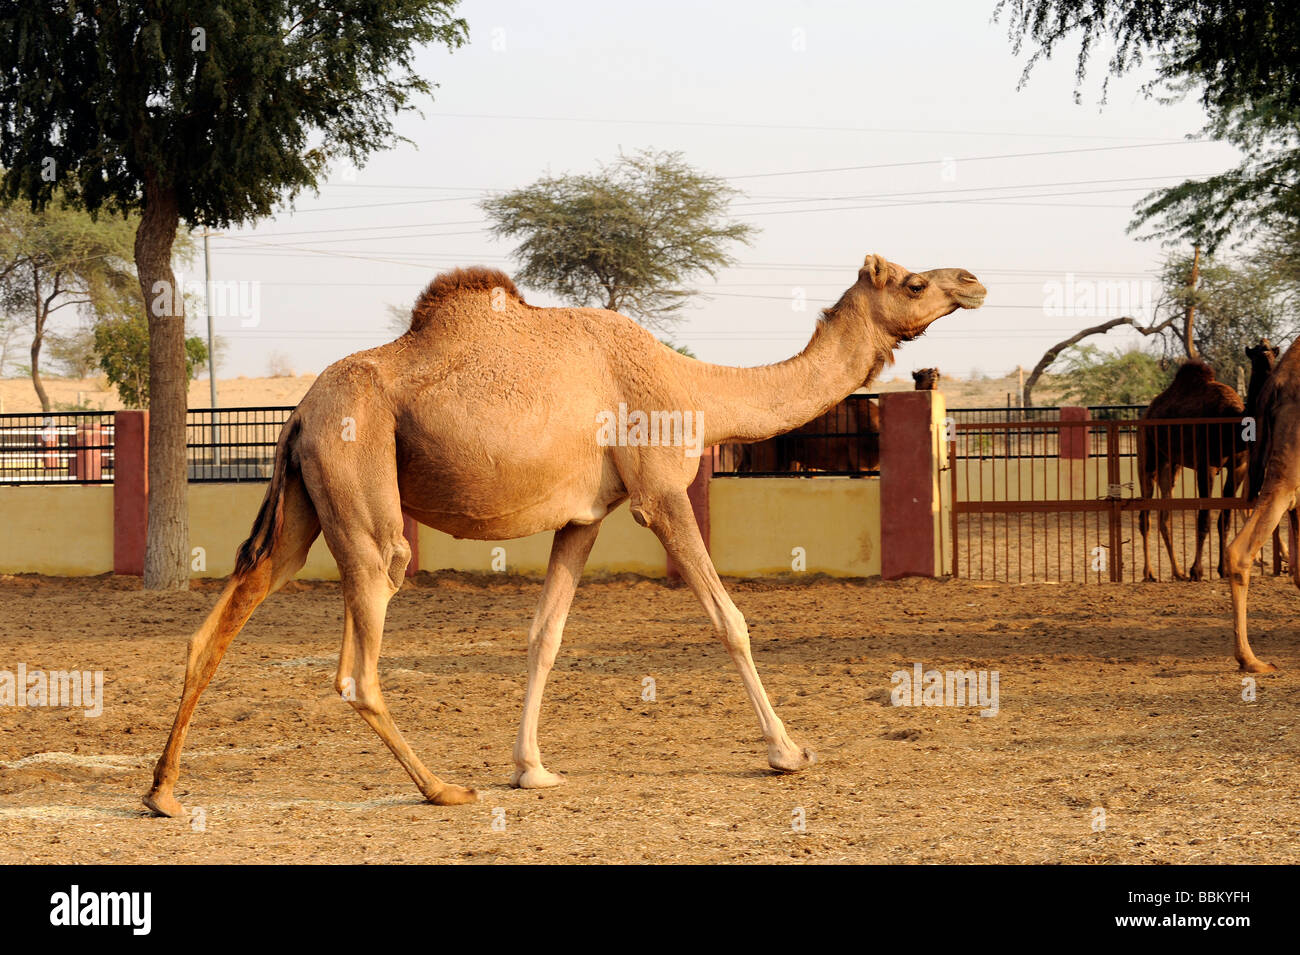 Dromedary camel (Camelus dromedarius), National Camel Research Farm, Bikaner, Rajasthan, North India, South Asia Stock Photo